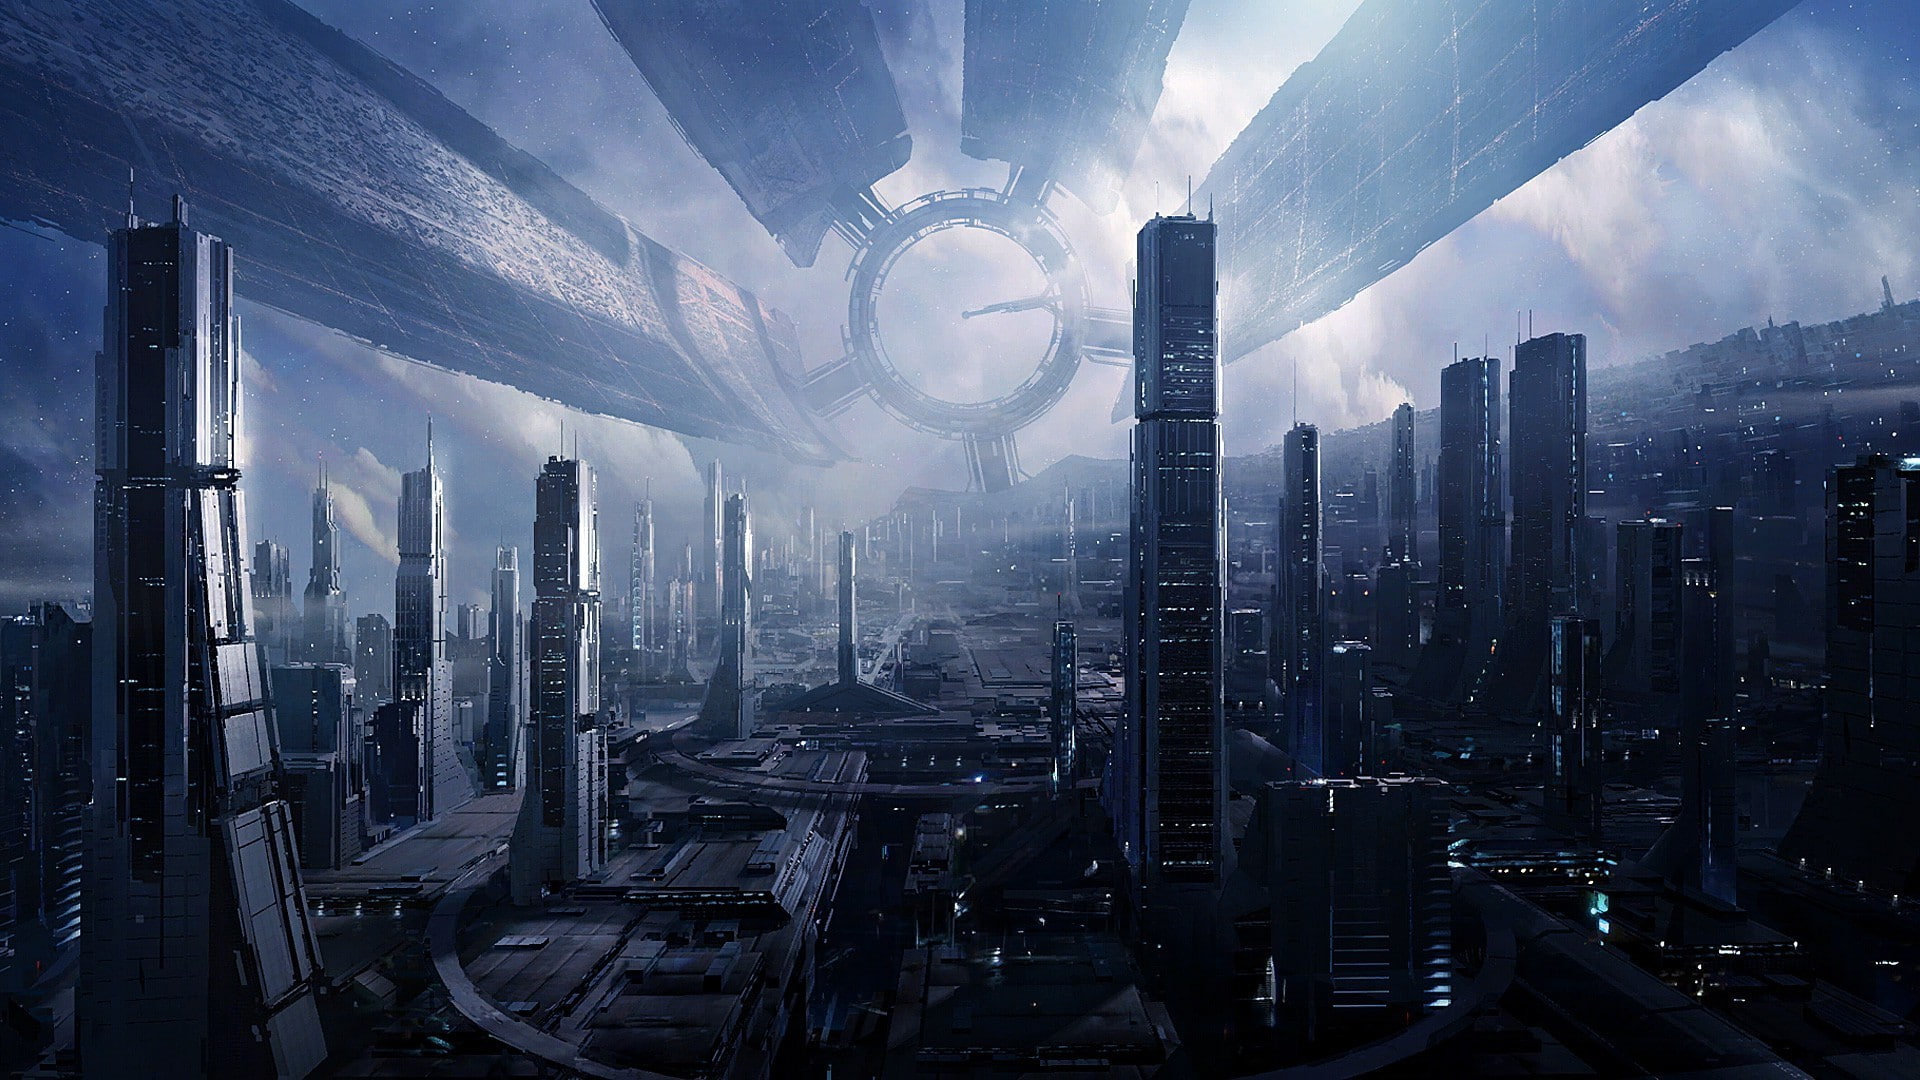 citadel mass effect mass effect 3 space station concept art city futuristic